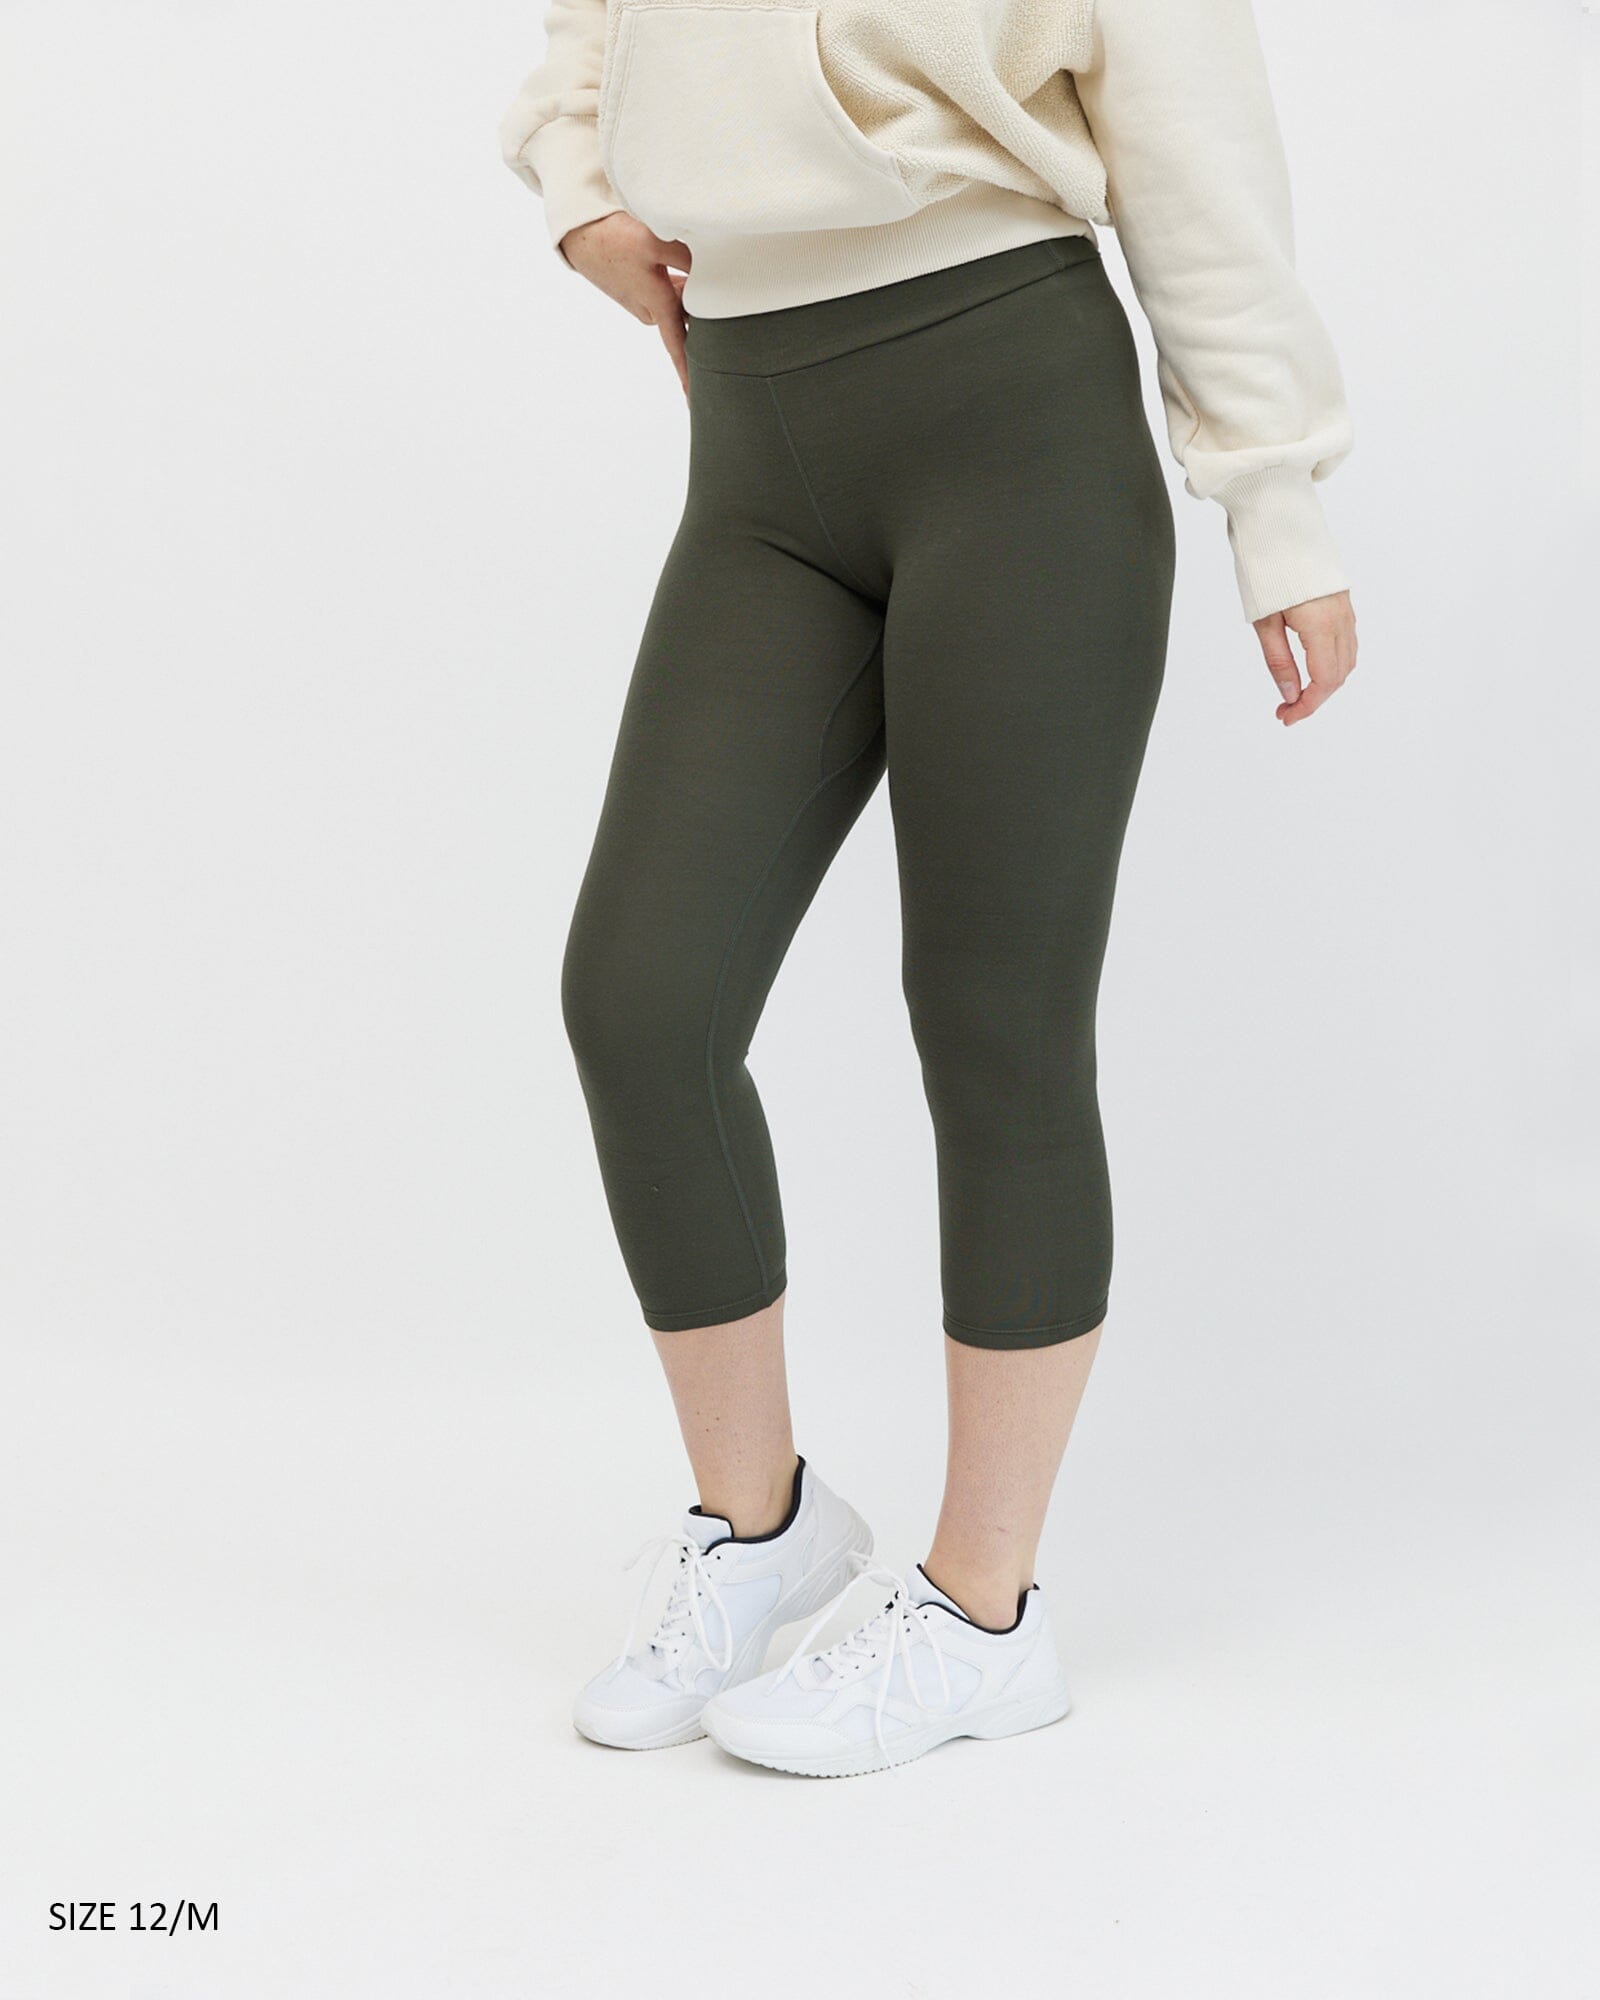 The ultimate comfy leggings - Cropped Moss Leggings Avila the label 